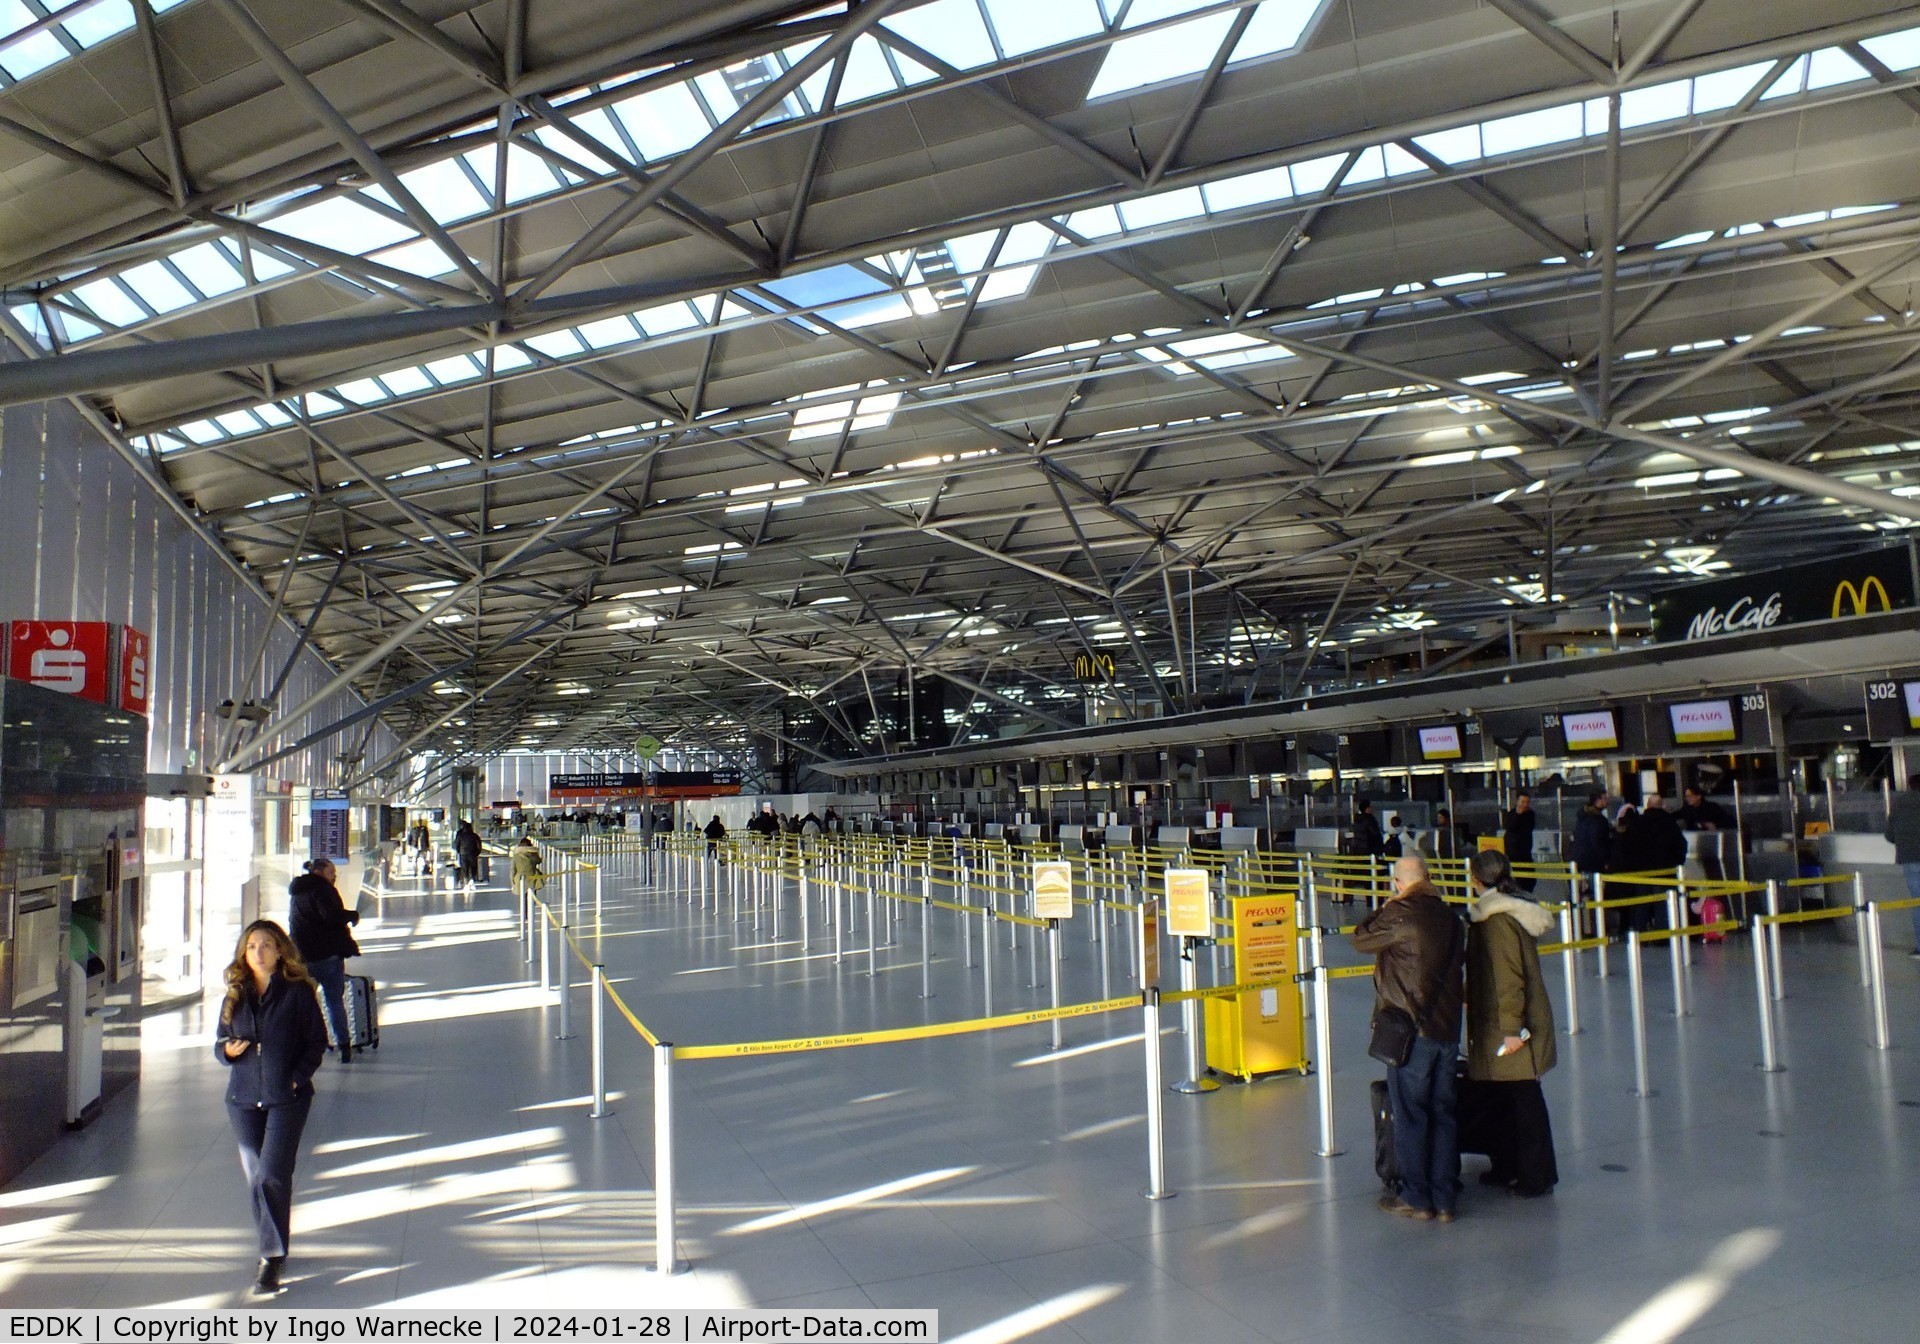 Cologne Bonn Airport, Cologne/Bonn Germany (EDDK) - inside the departure level of terminal 2 at Köln/Bonn airport